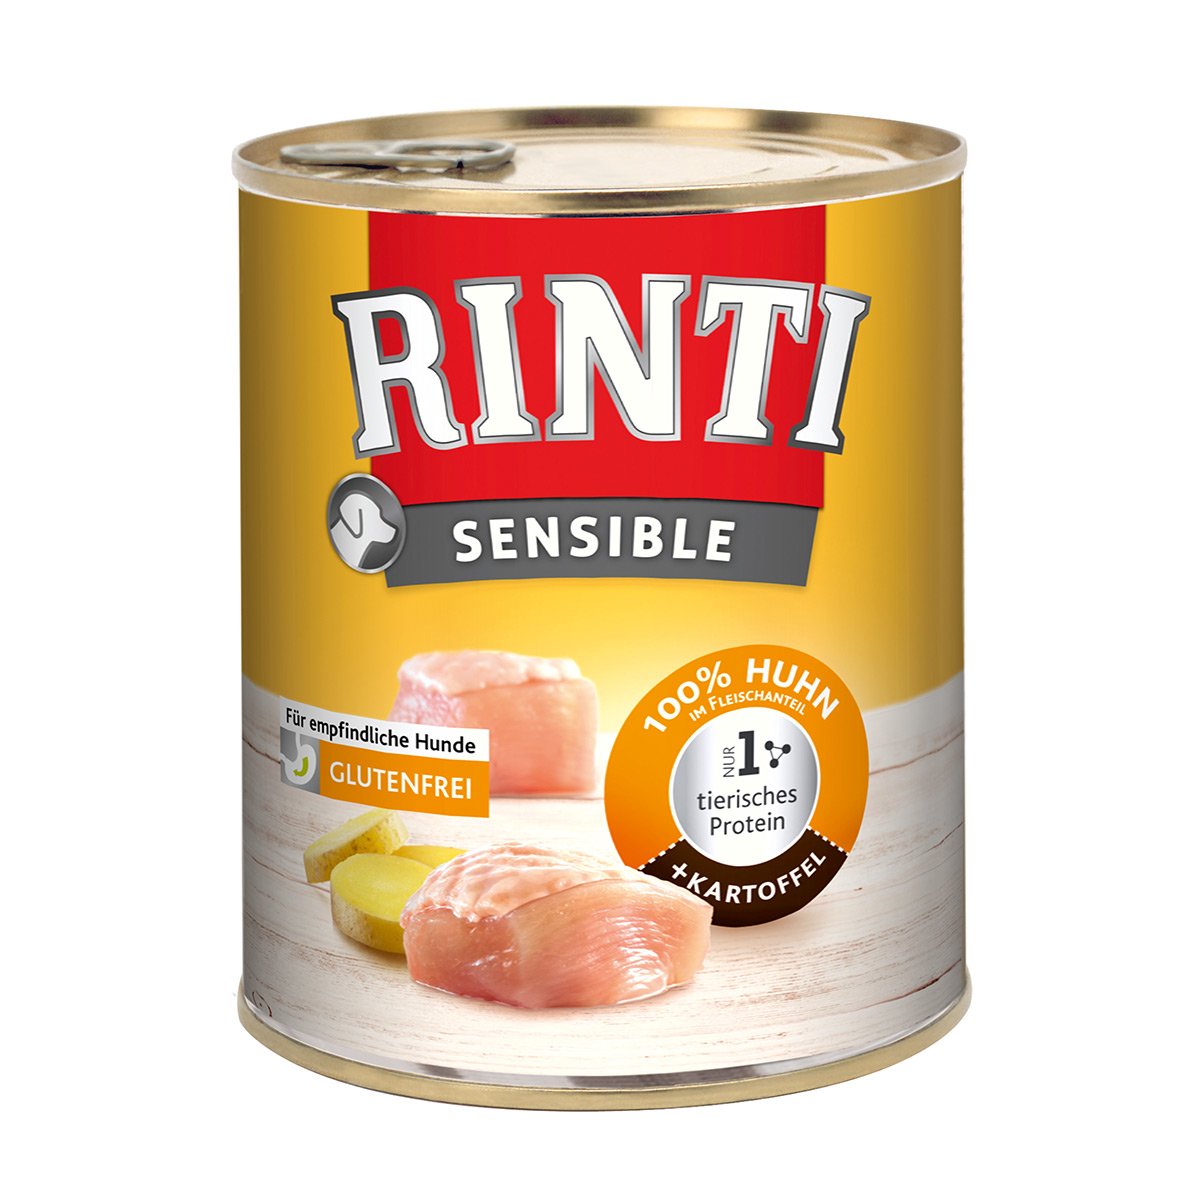 Rinti Sensible Huhn und Kartoffel 24x800g von Rinti